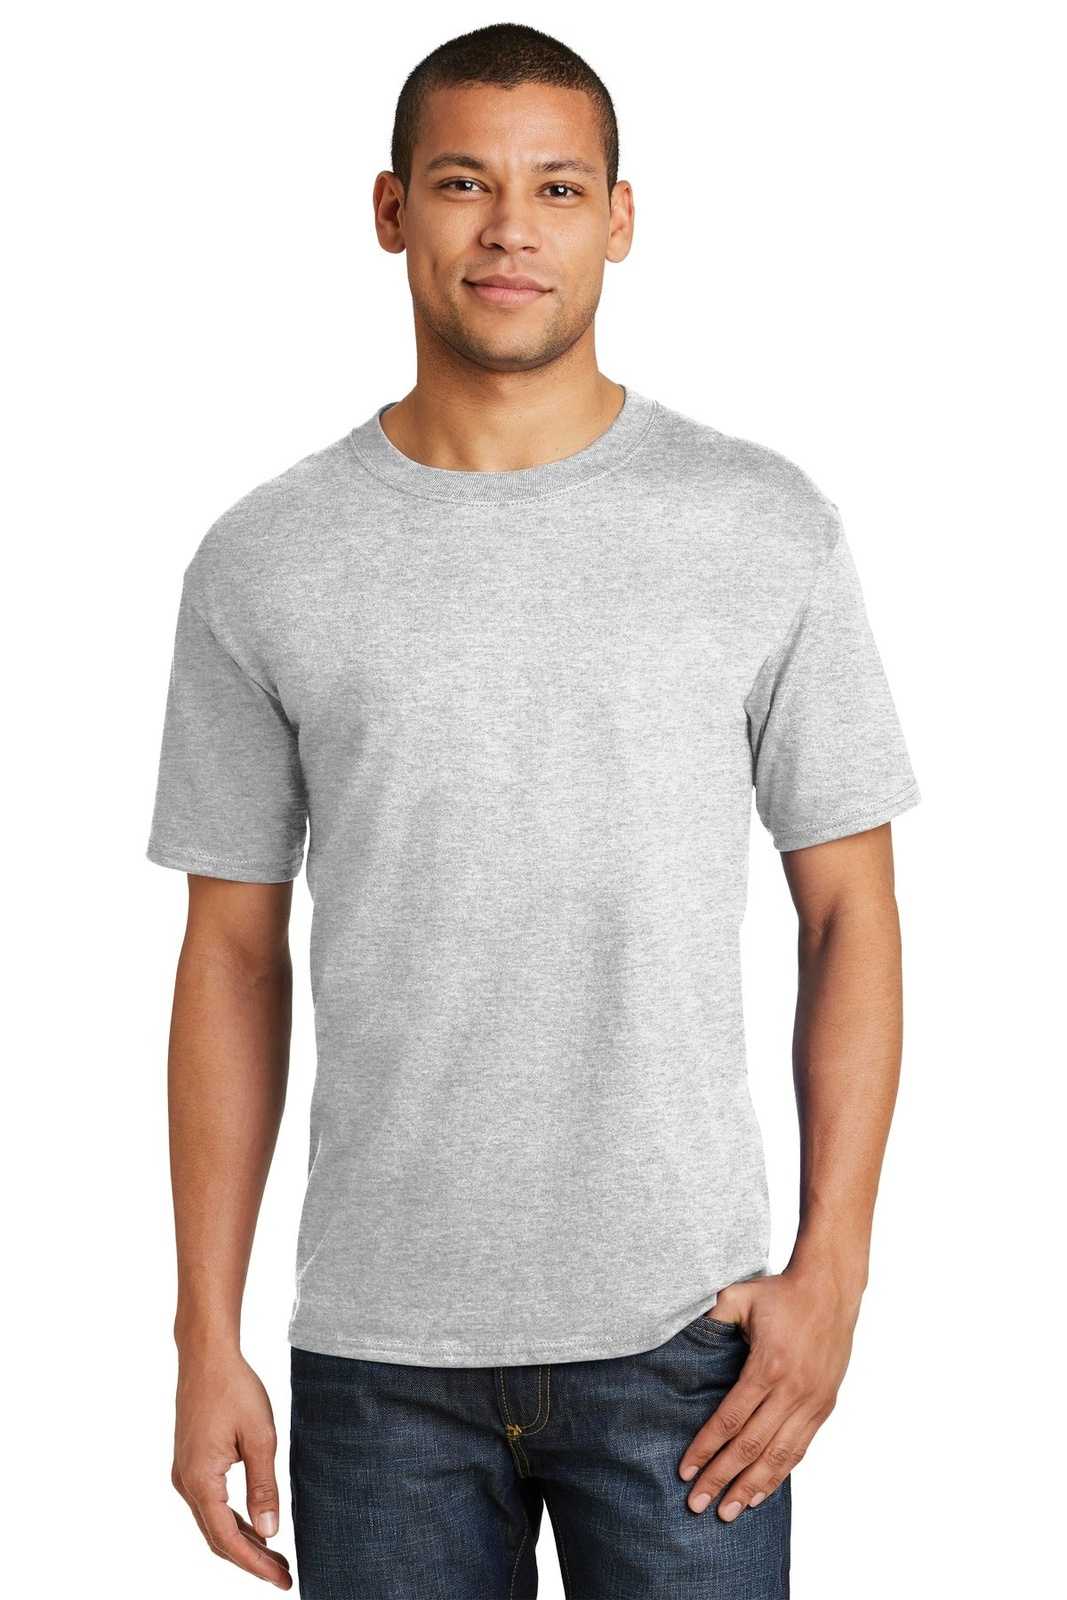 Hanes 5180 Beefy-T 100% Cotton T-Shirt - Ash - HIT a Double